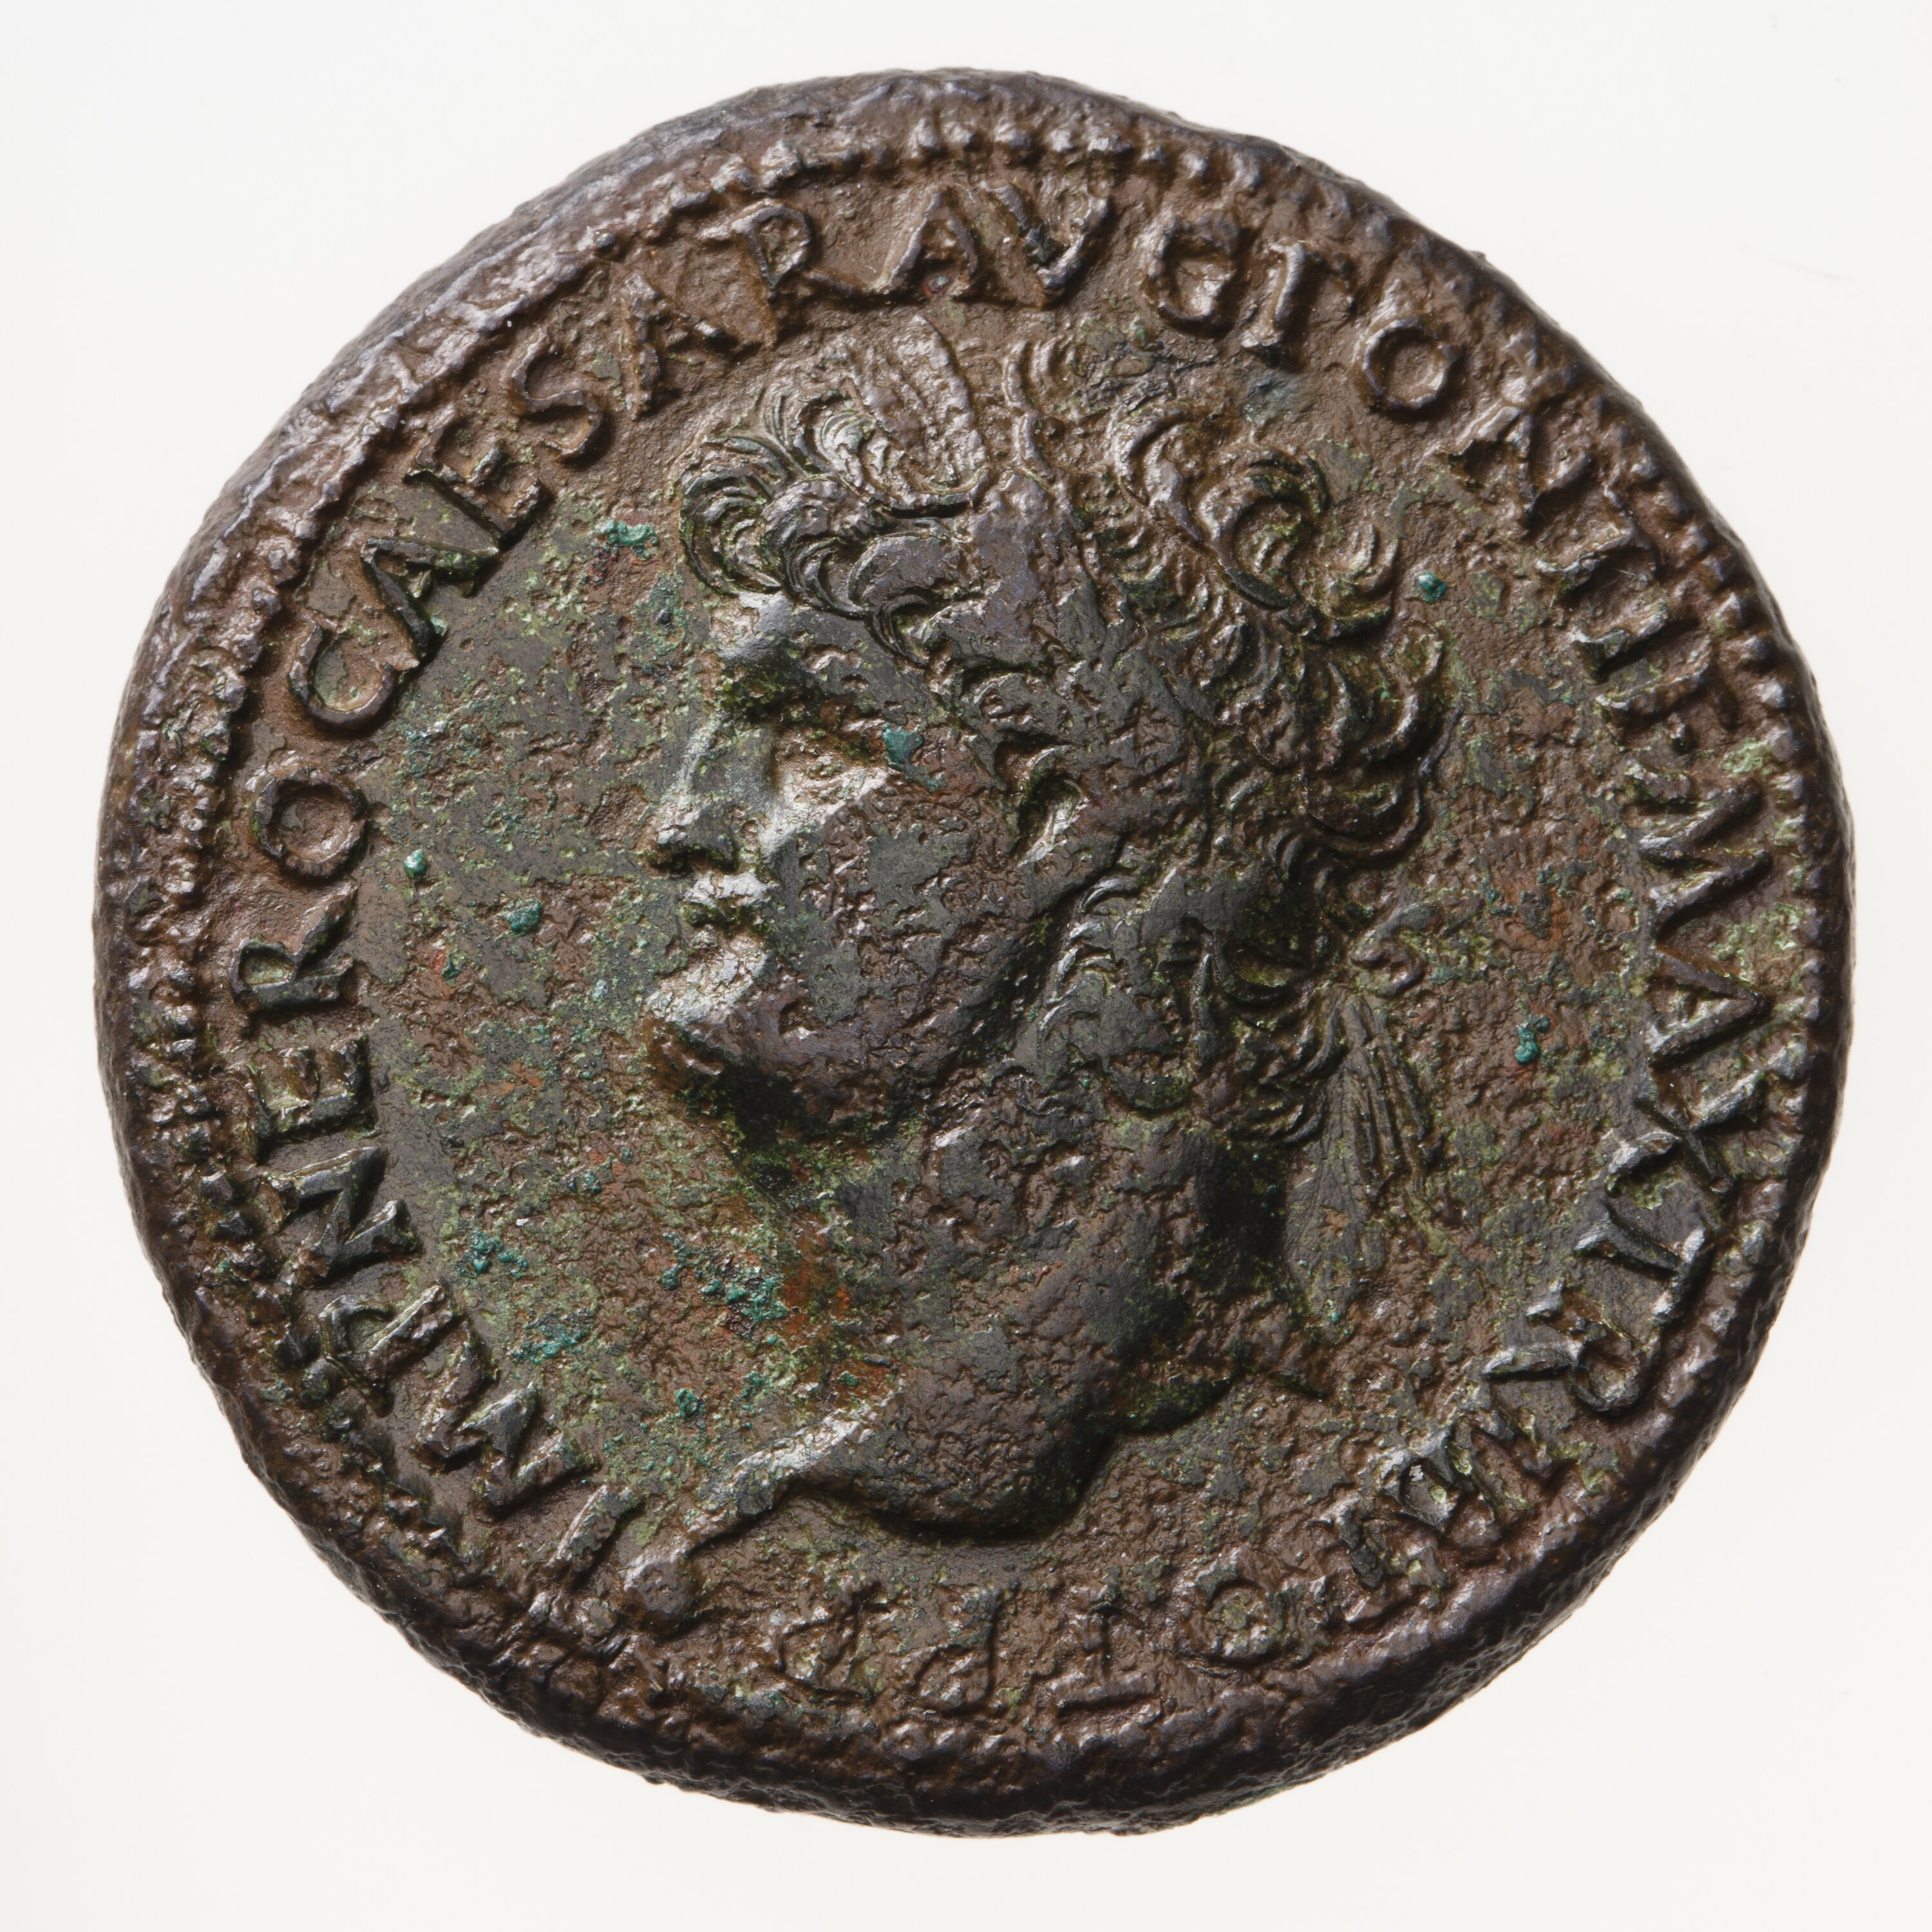 Coin - Emperor Nero, Ancient Roman Empire, circa 66 AD